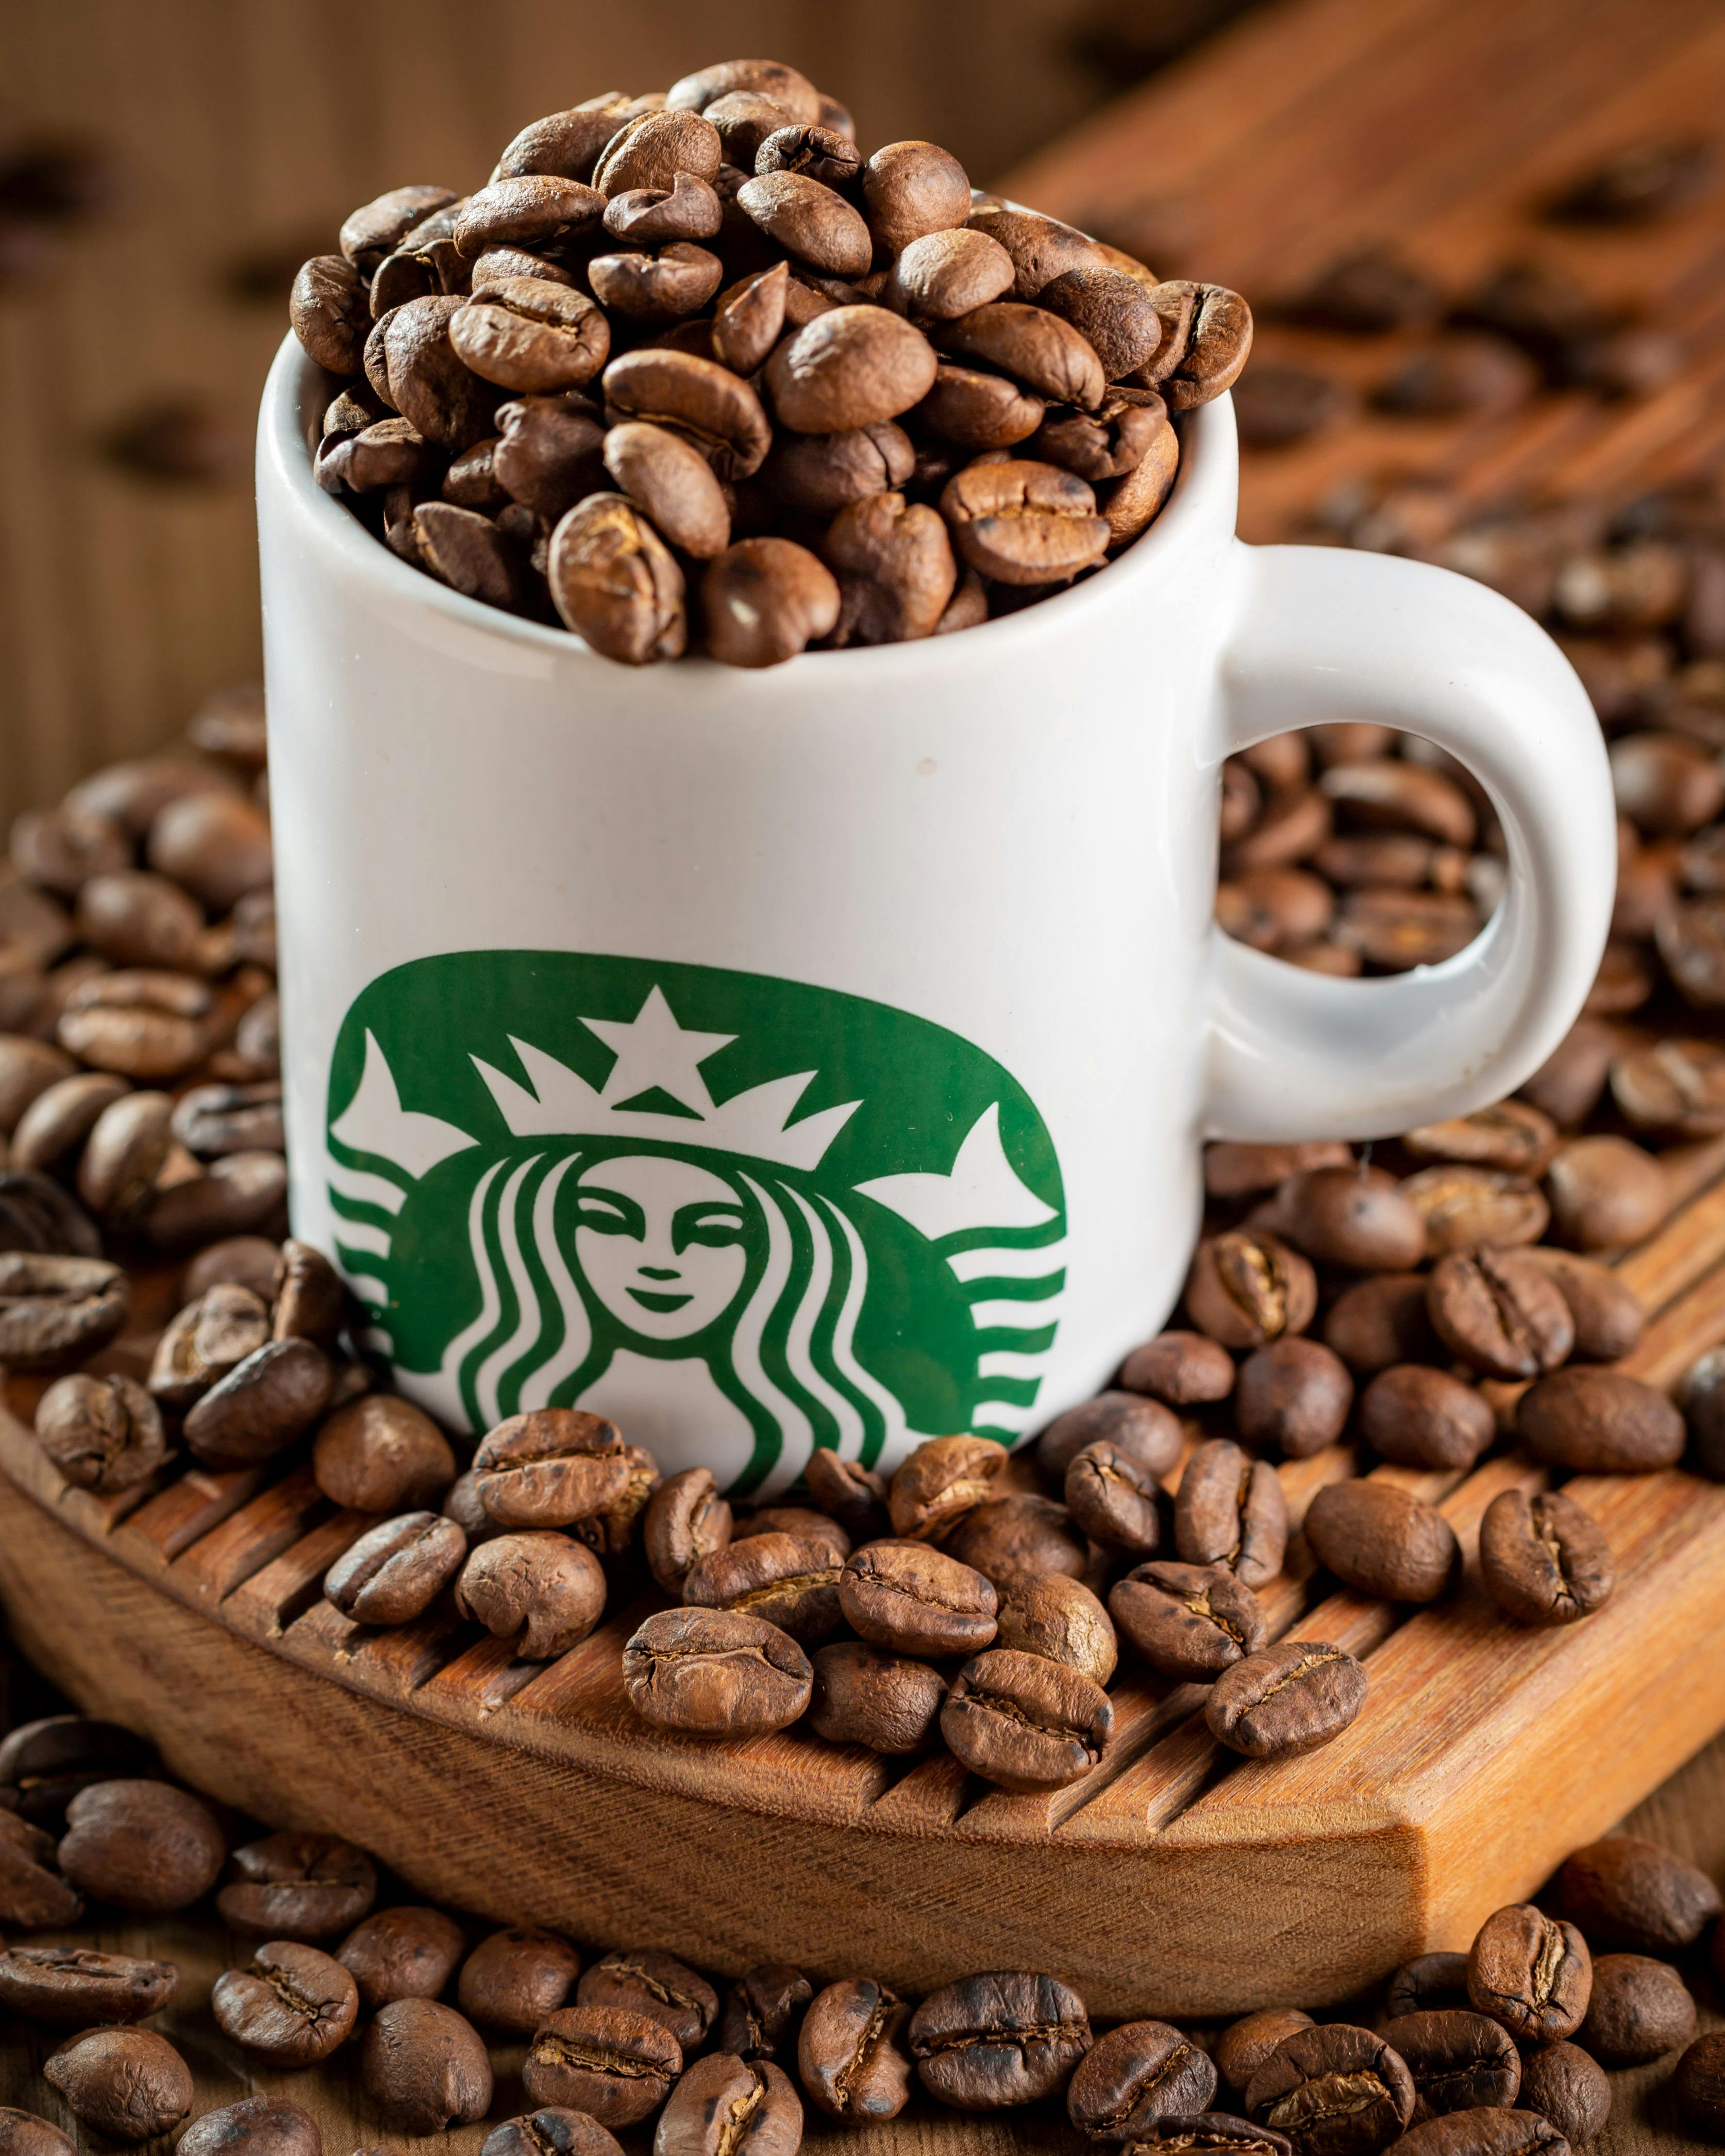 Starbucks Mug Full of Coffee Beans · Free Stock Photo